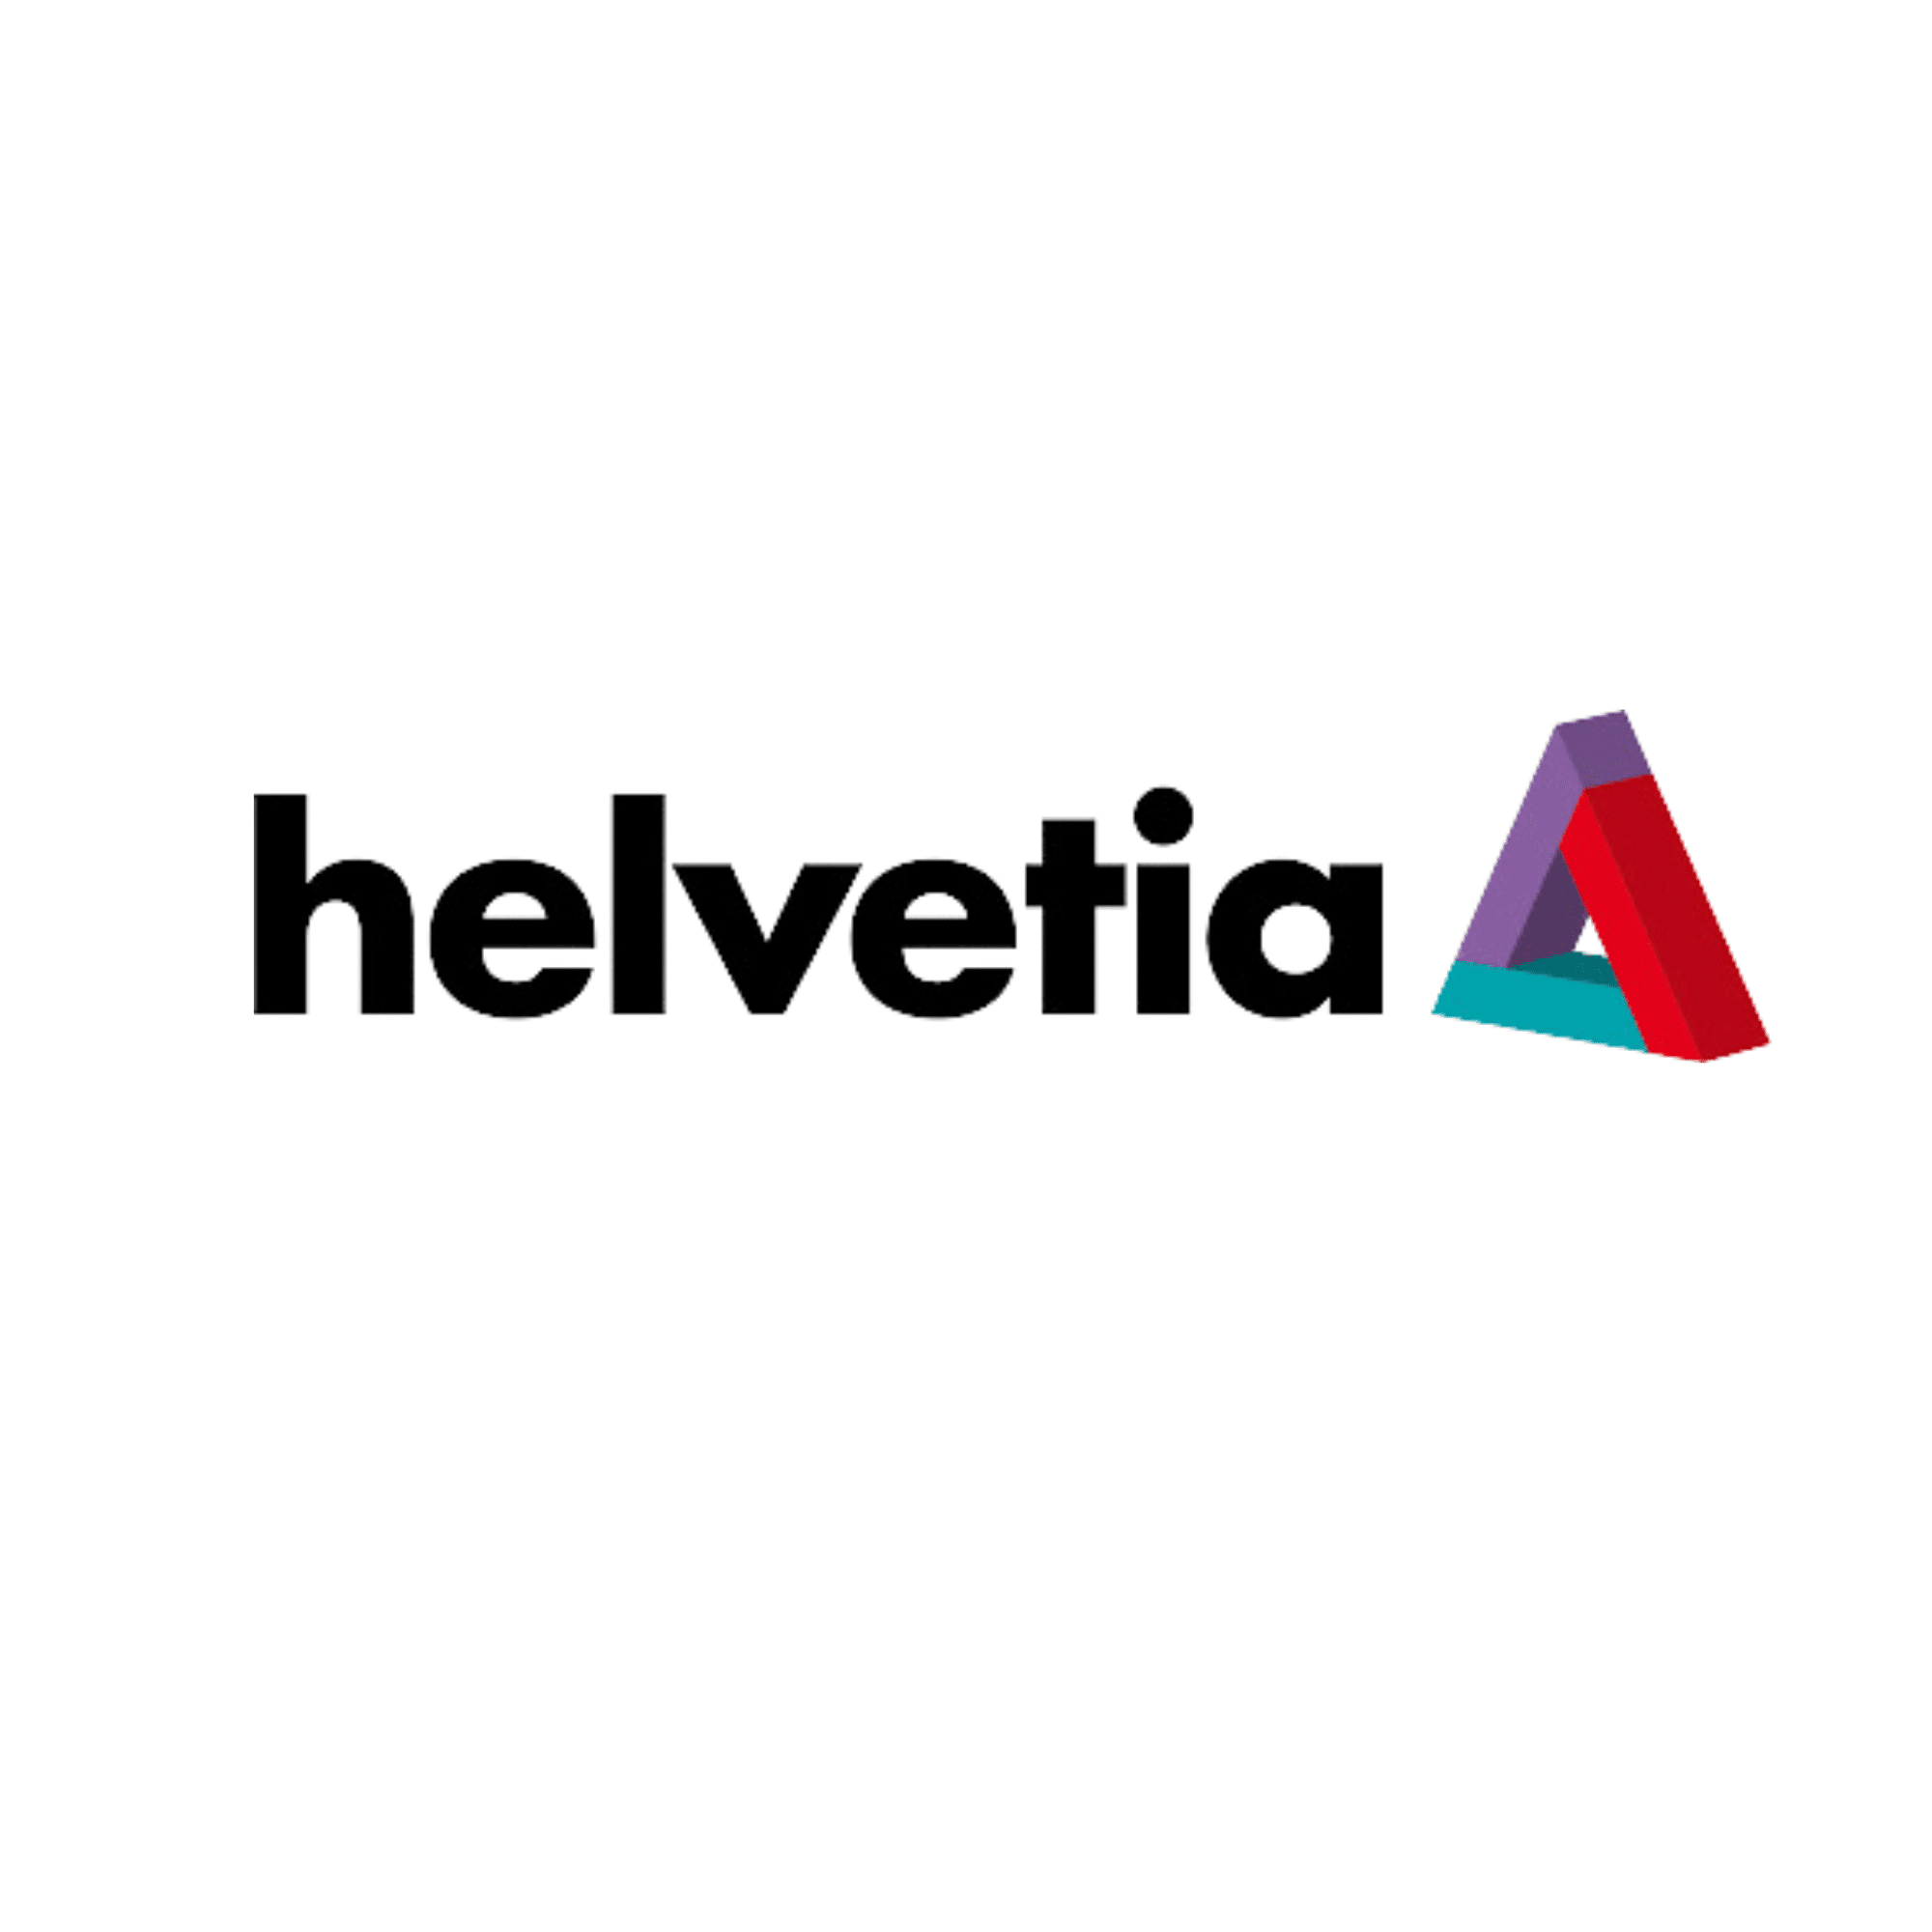 helvetia Logo